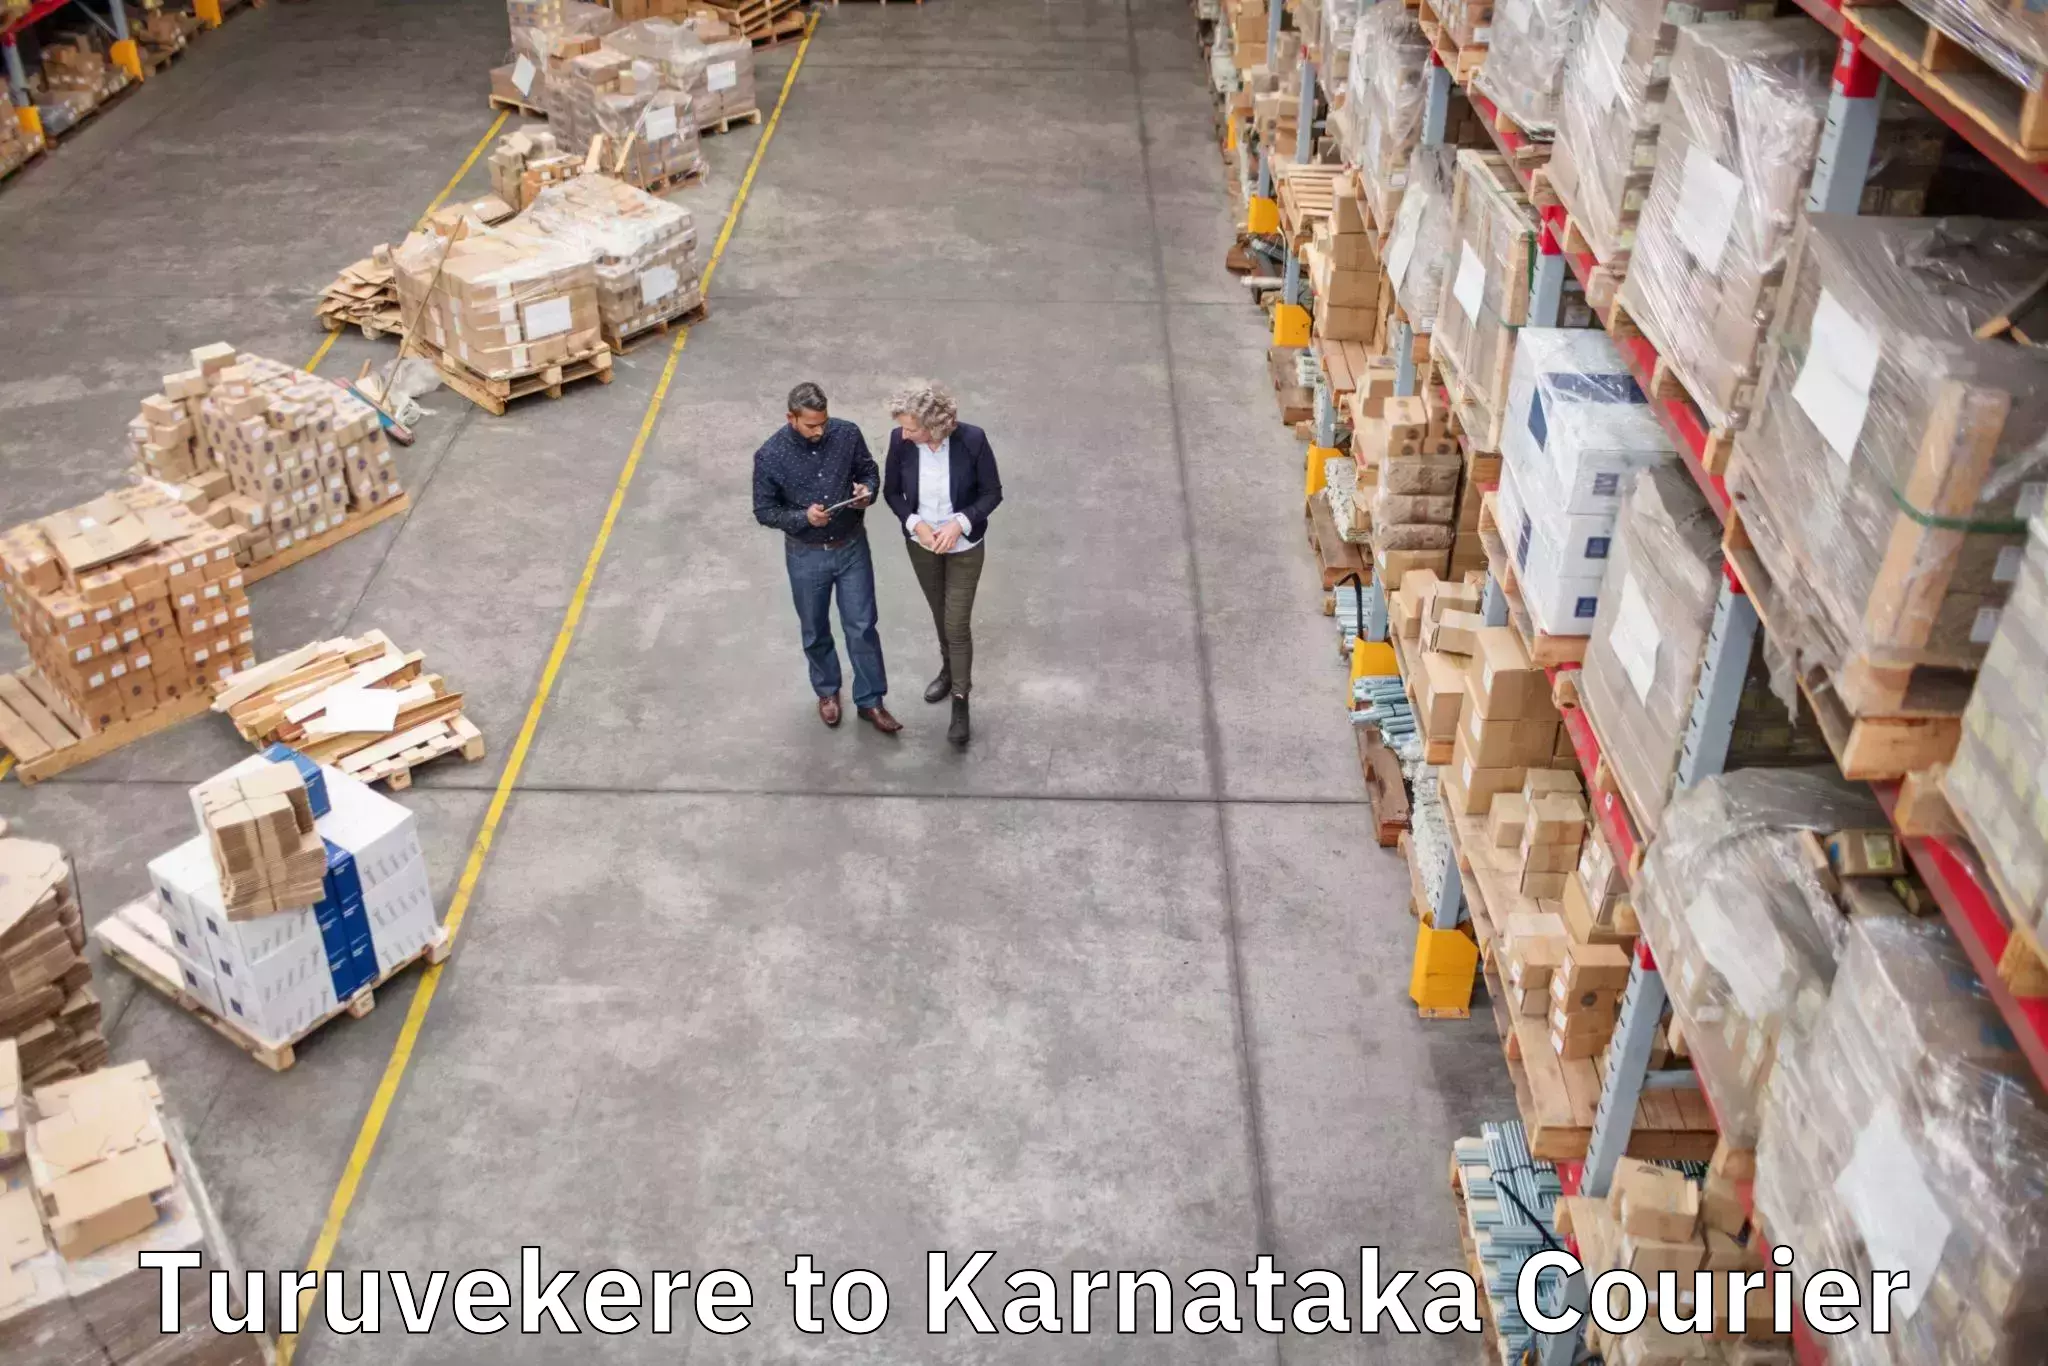 Luggage delivery app Turuvekere to Karnataka